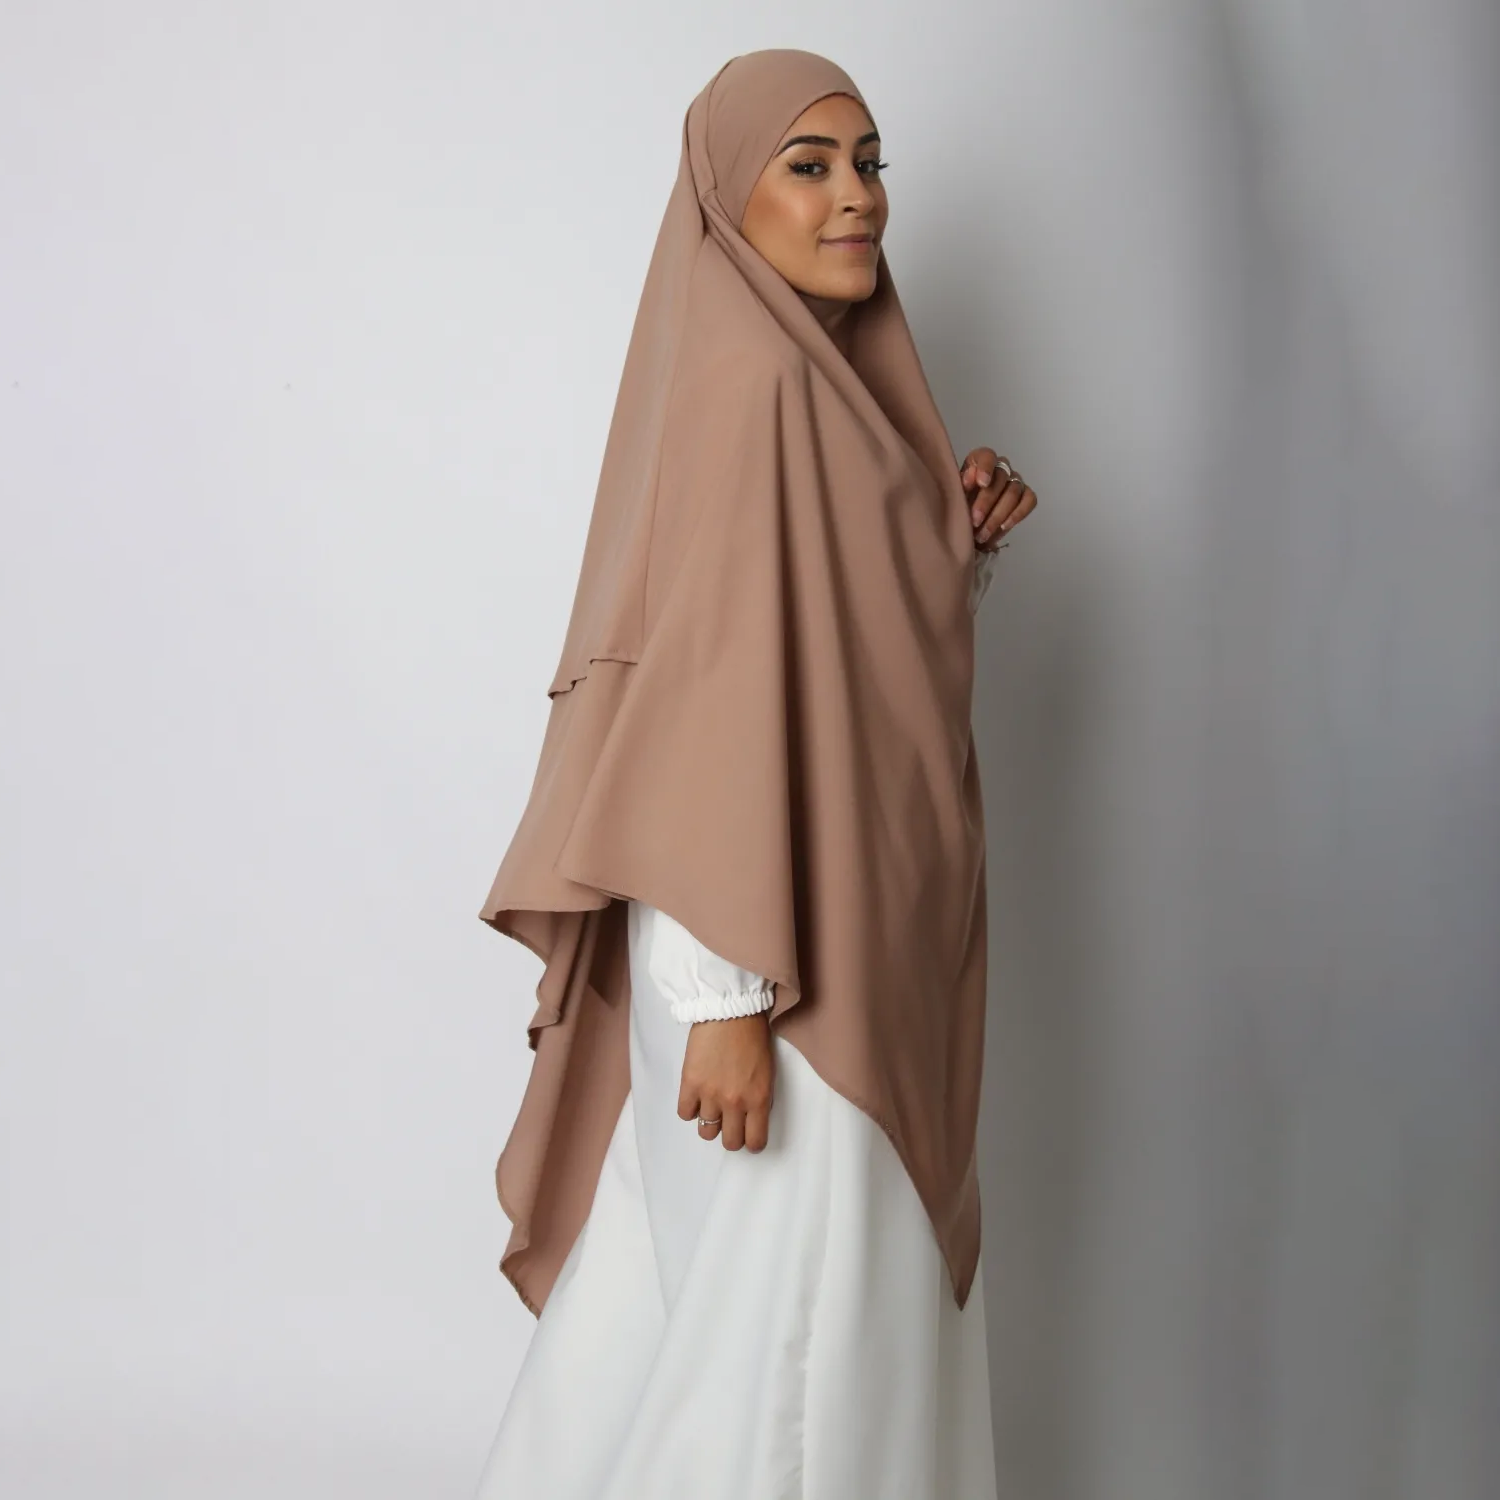 Khimar : 2 Layer Triangular Diamond Instant Khimar-Hijab-Jilbab for Girls & Women in  Taupe Color | Tie Back Burkha Jilbab Khimar Style Abaya Hijab Niqab Islamic Modest Wear